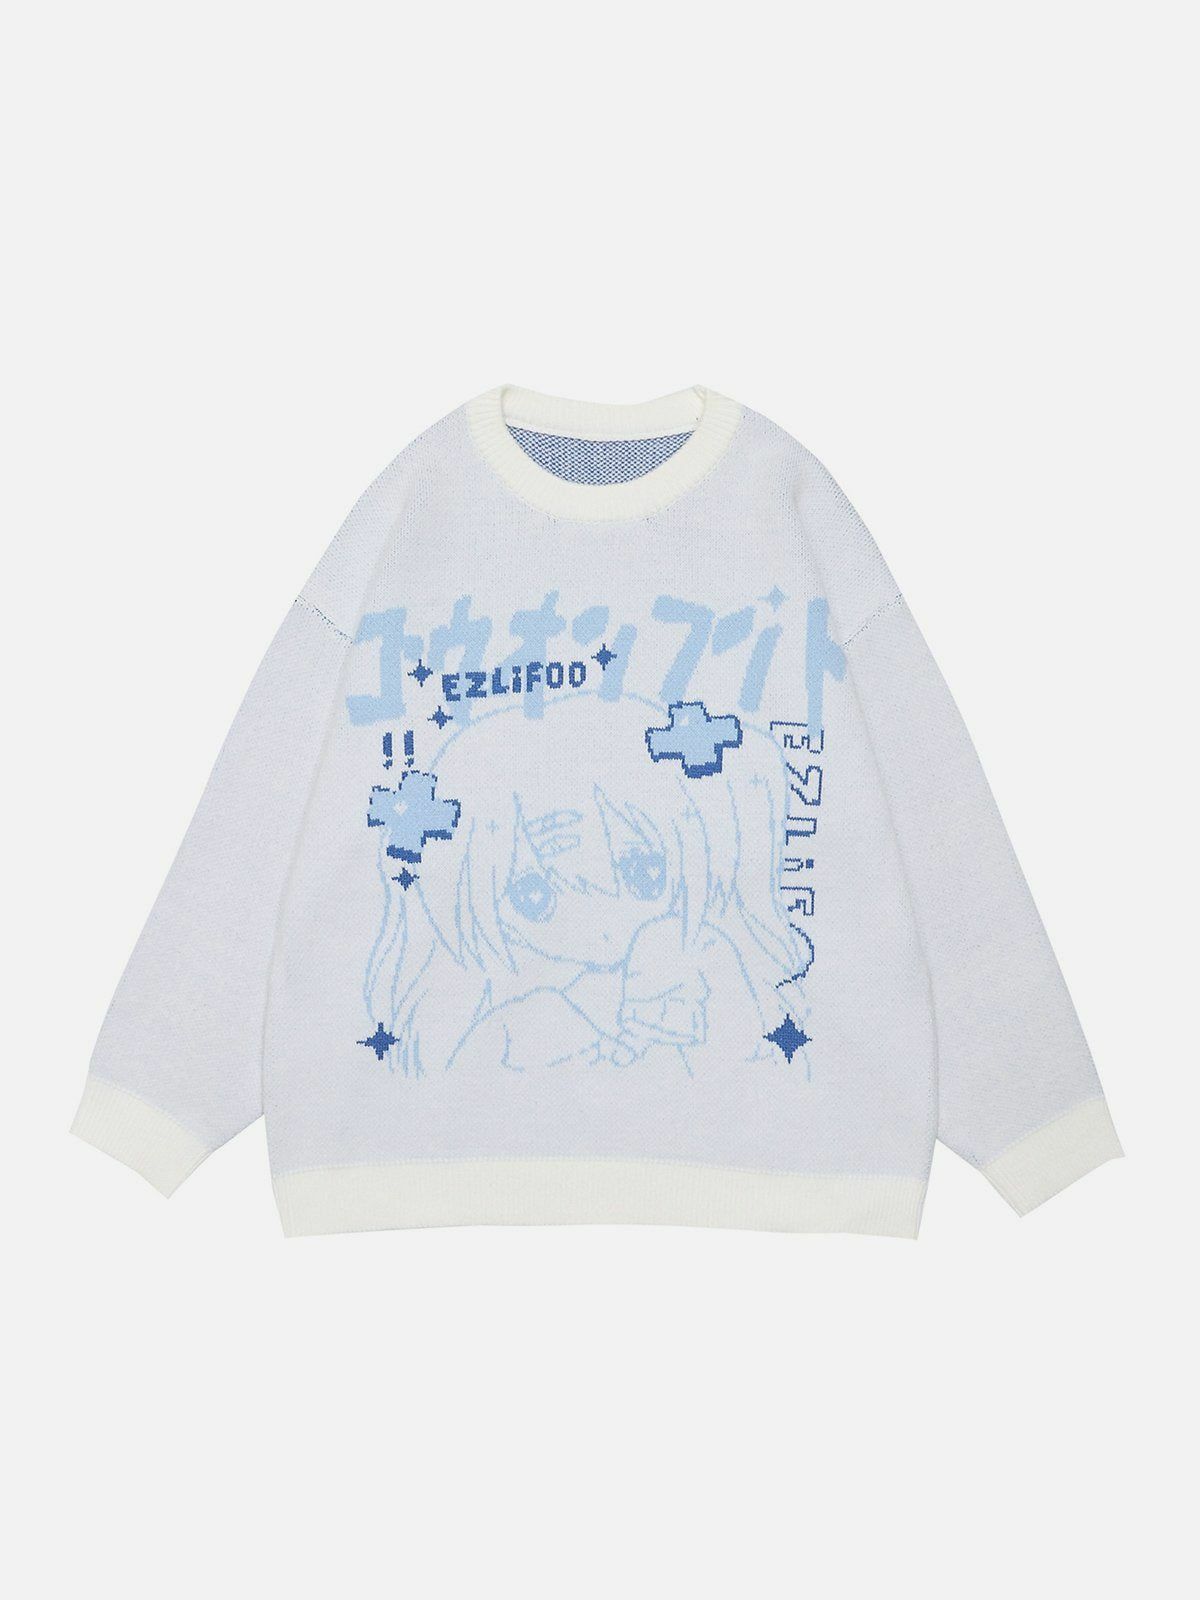 youthful cartoon girl print sweater playful & vibrant streetwear 3245